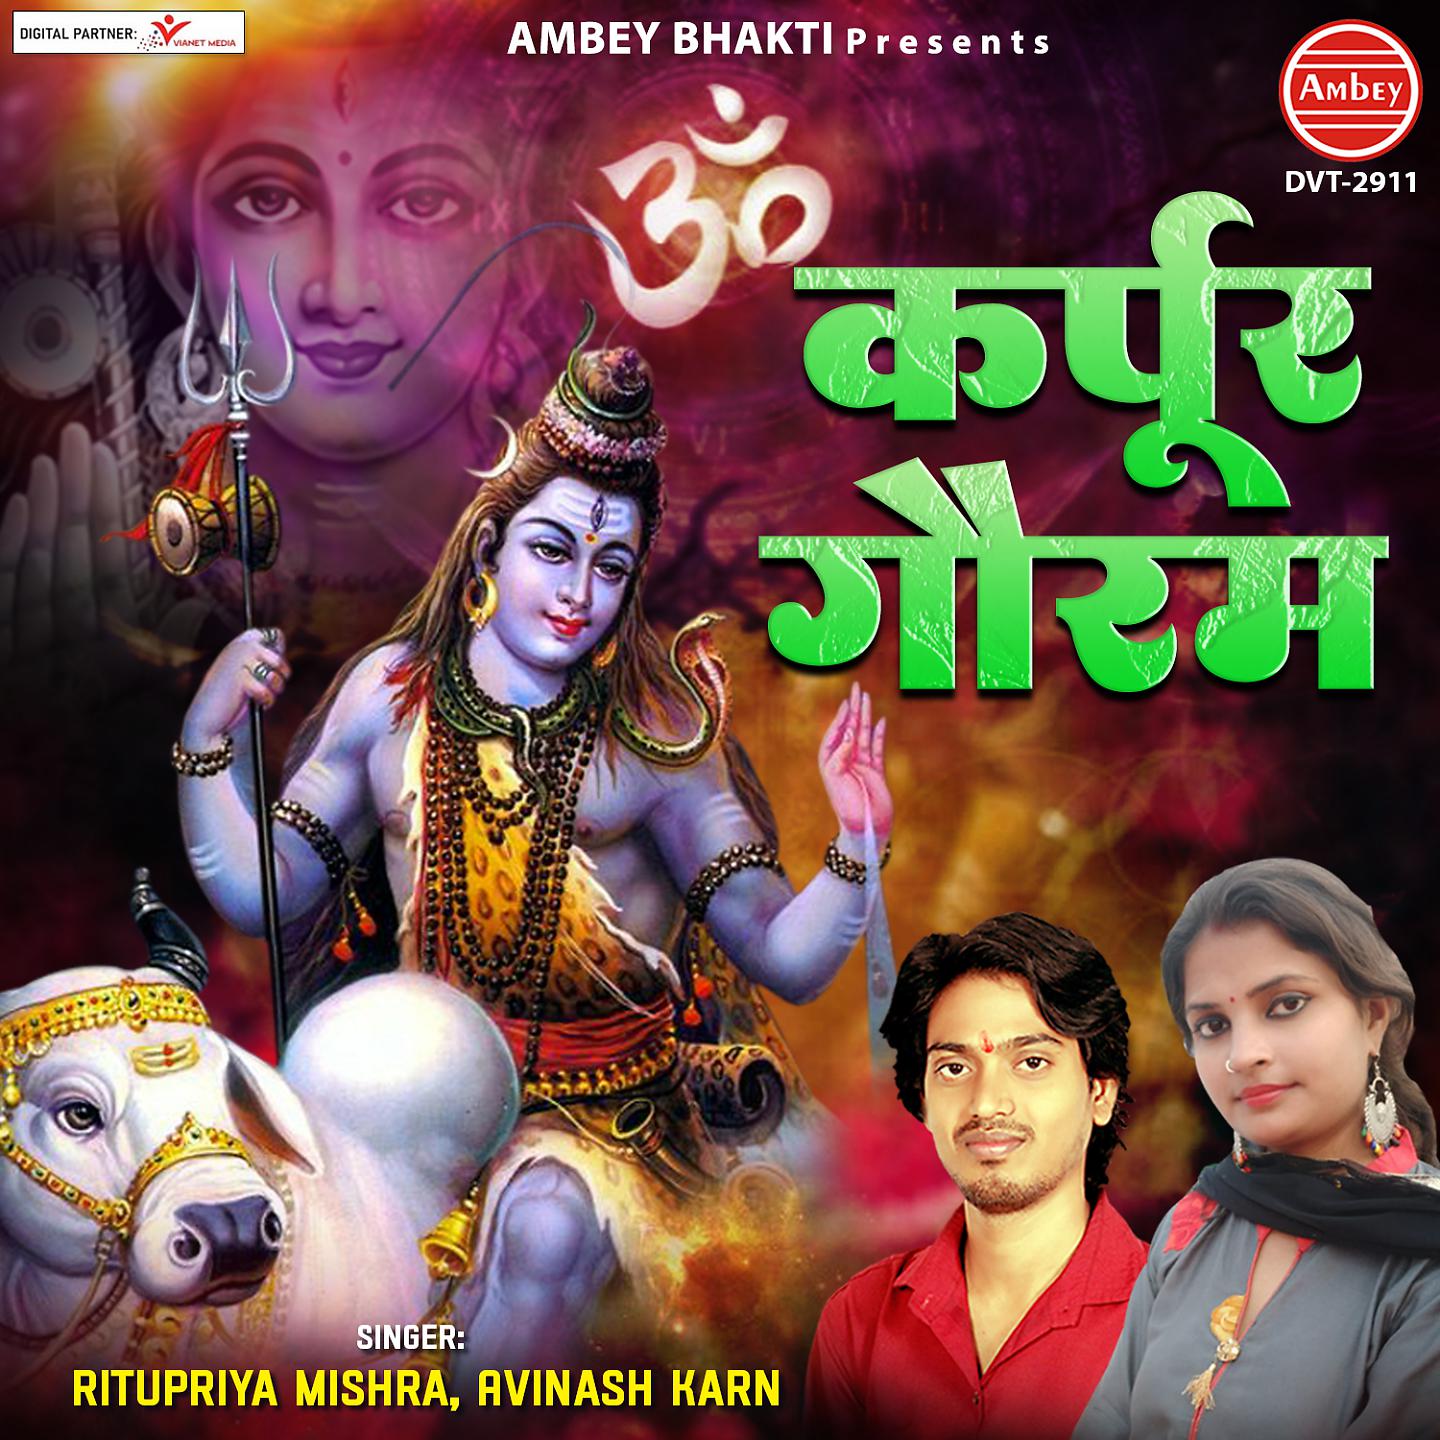 Постер альбома Karpur Gauram